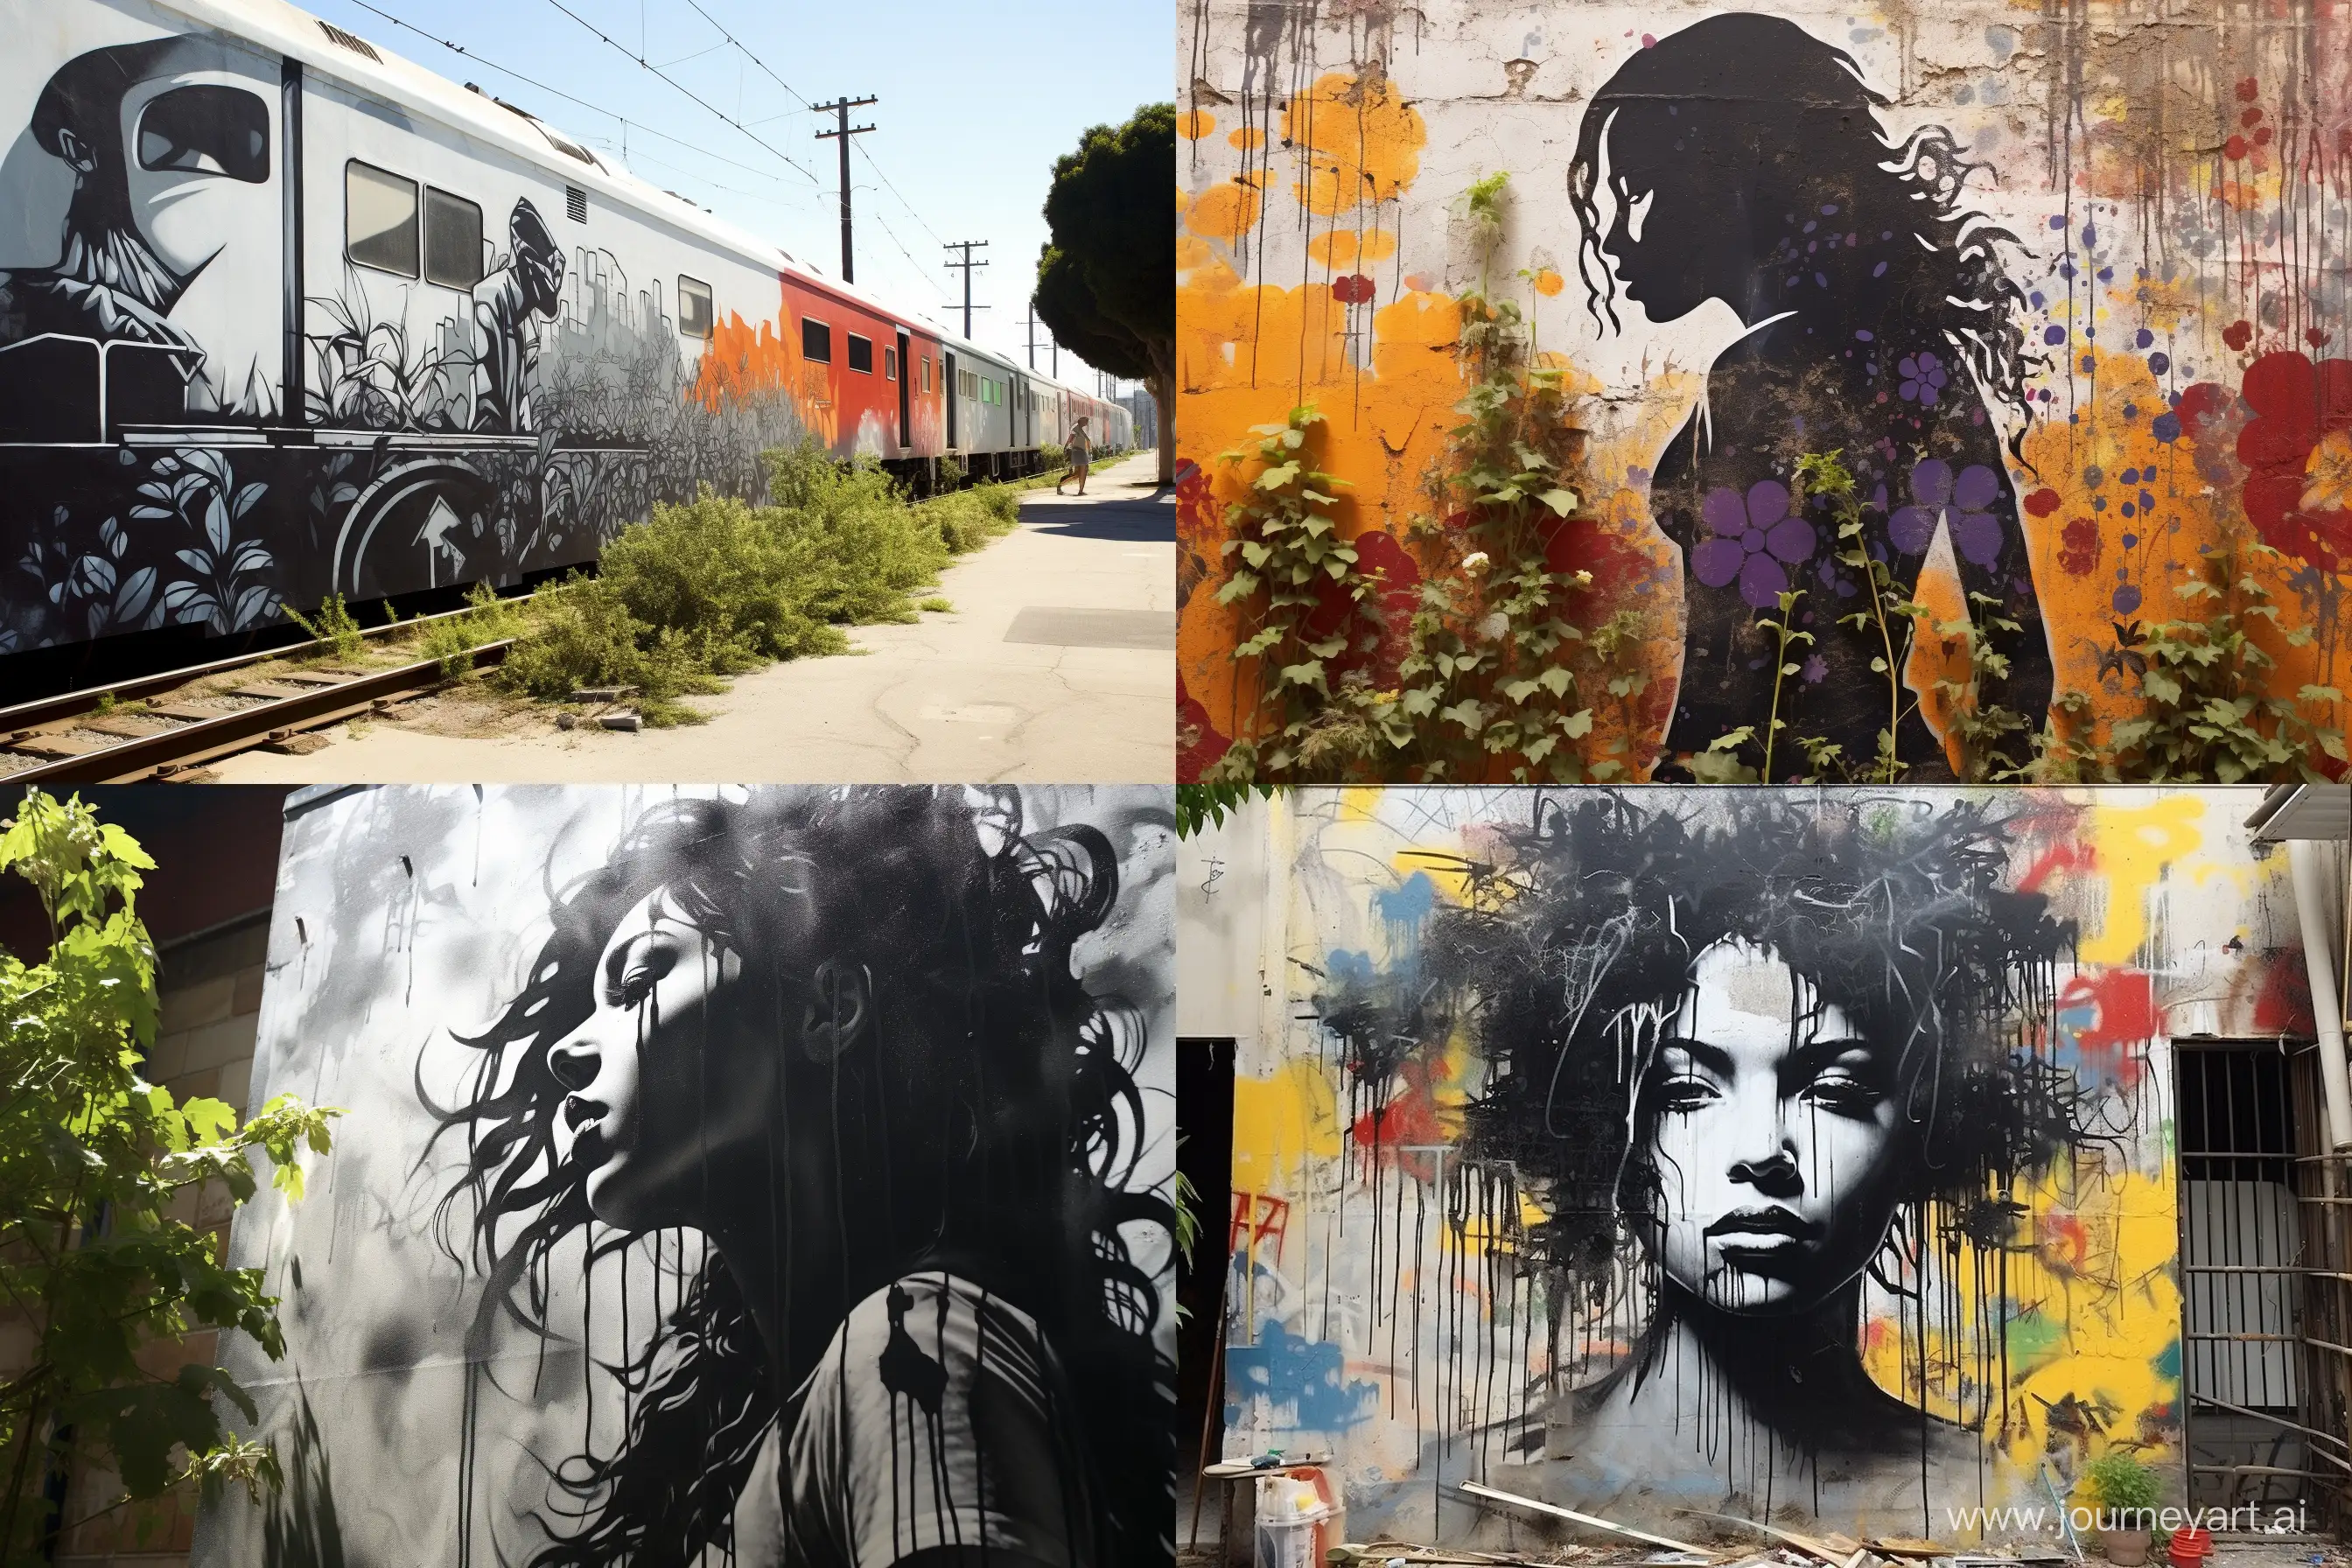 Stencil Art: urban scenes craft a street art-inspired image using stencils and spray paint. --ar 3:2